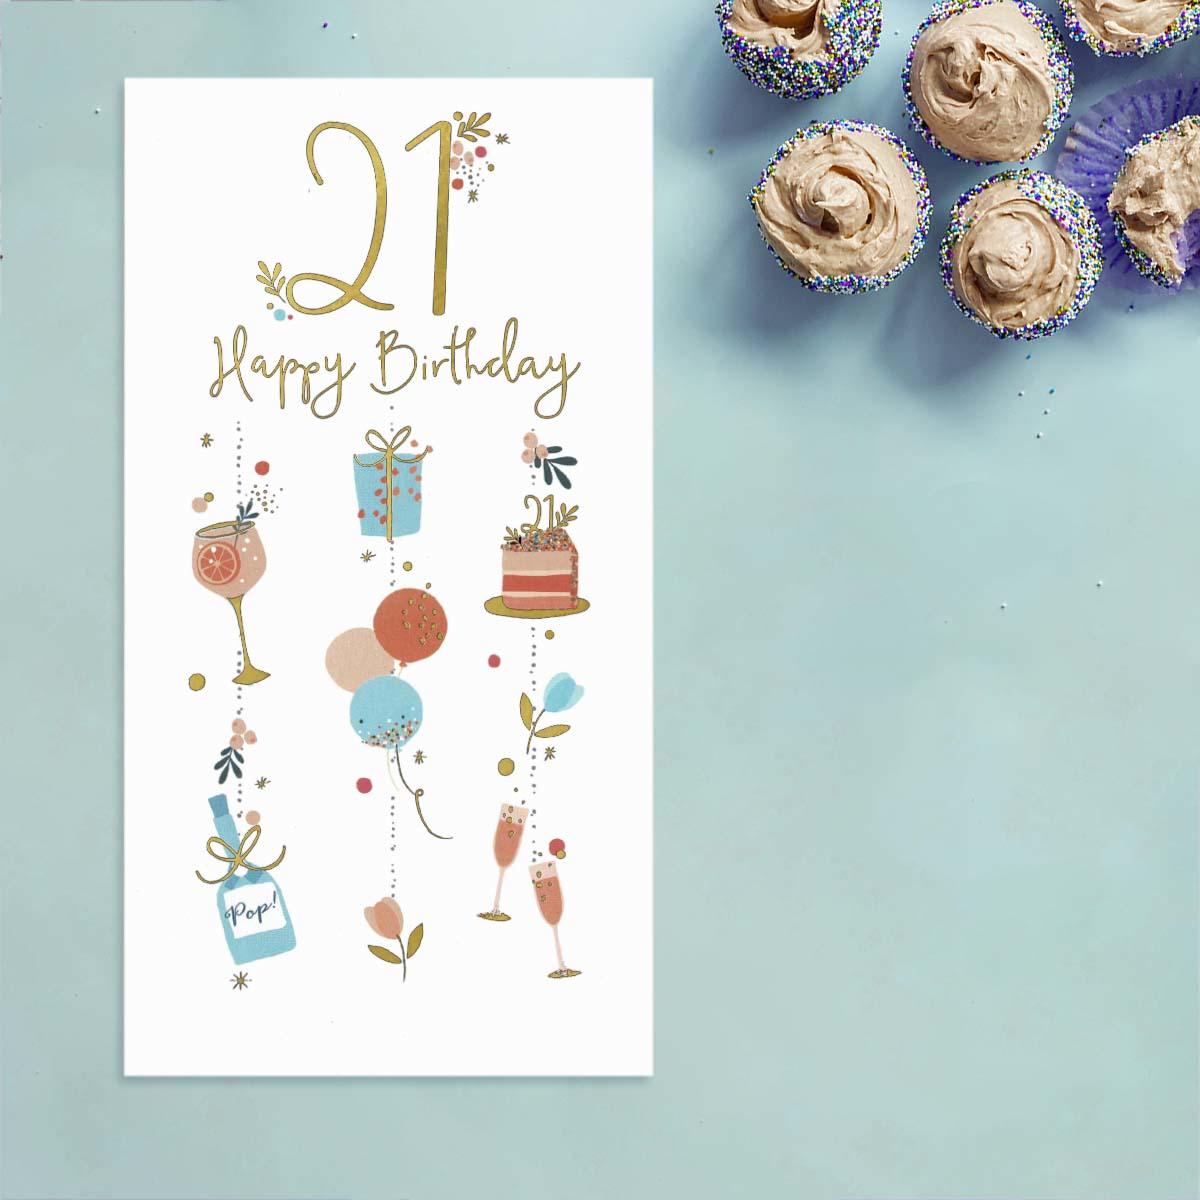 Simply Precious - 21 Happy Birthday Card Front Image